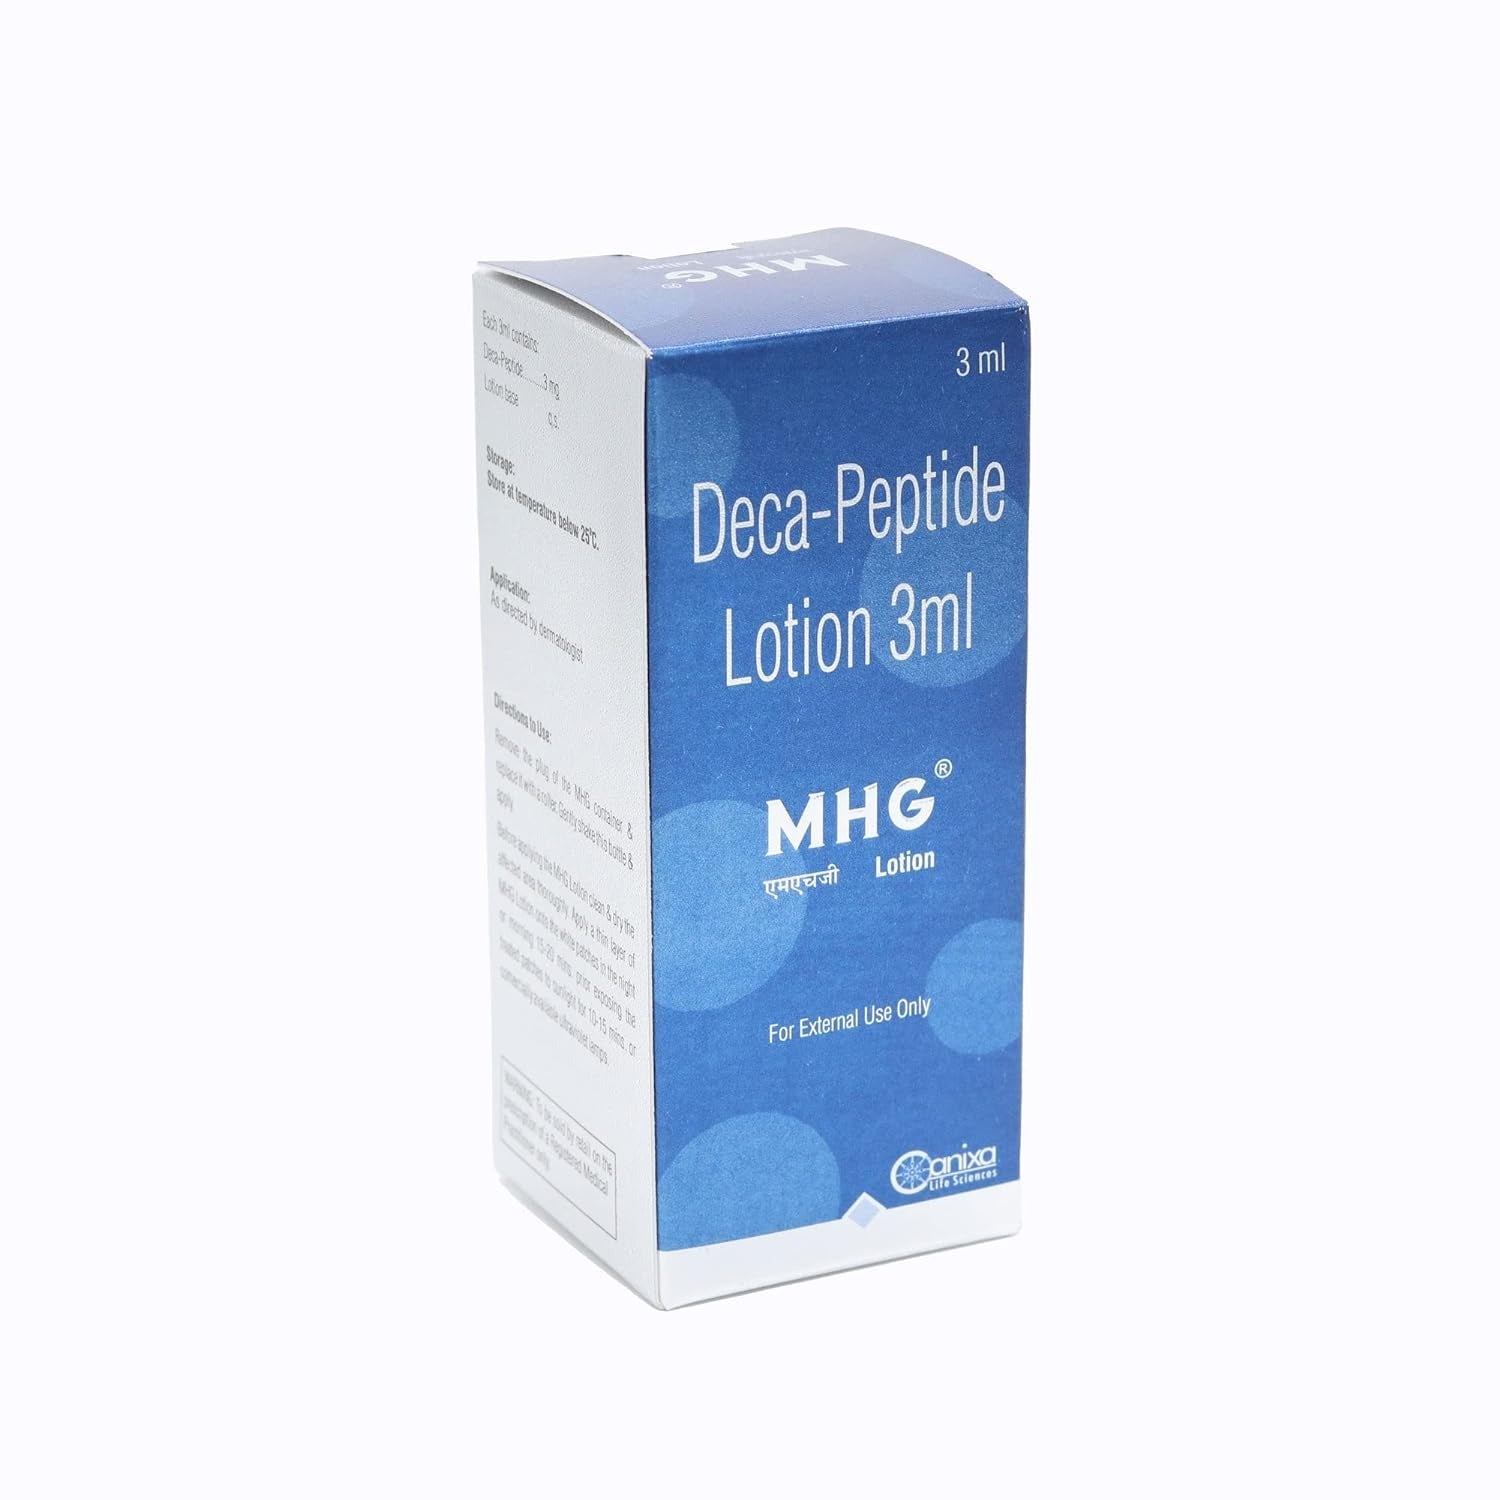 MHG Lotion (3 ml)